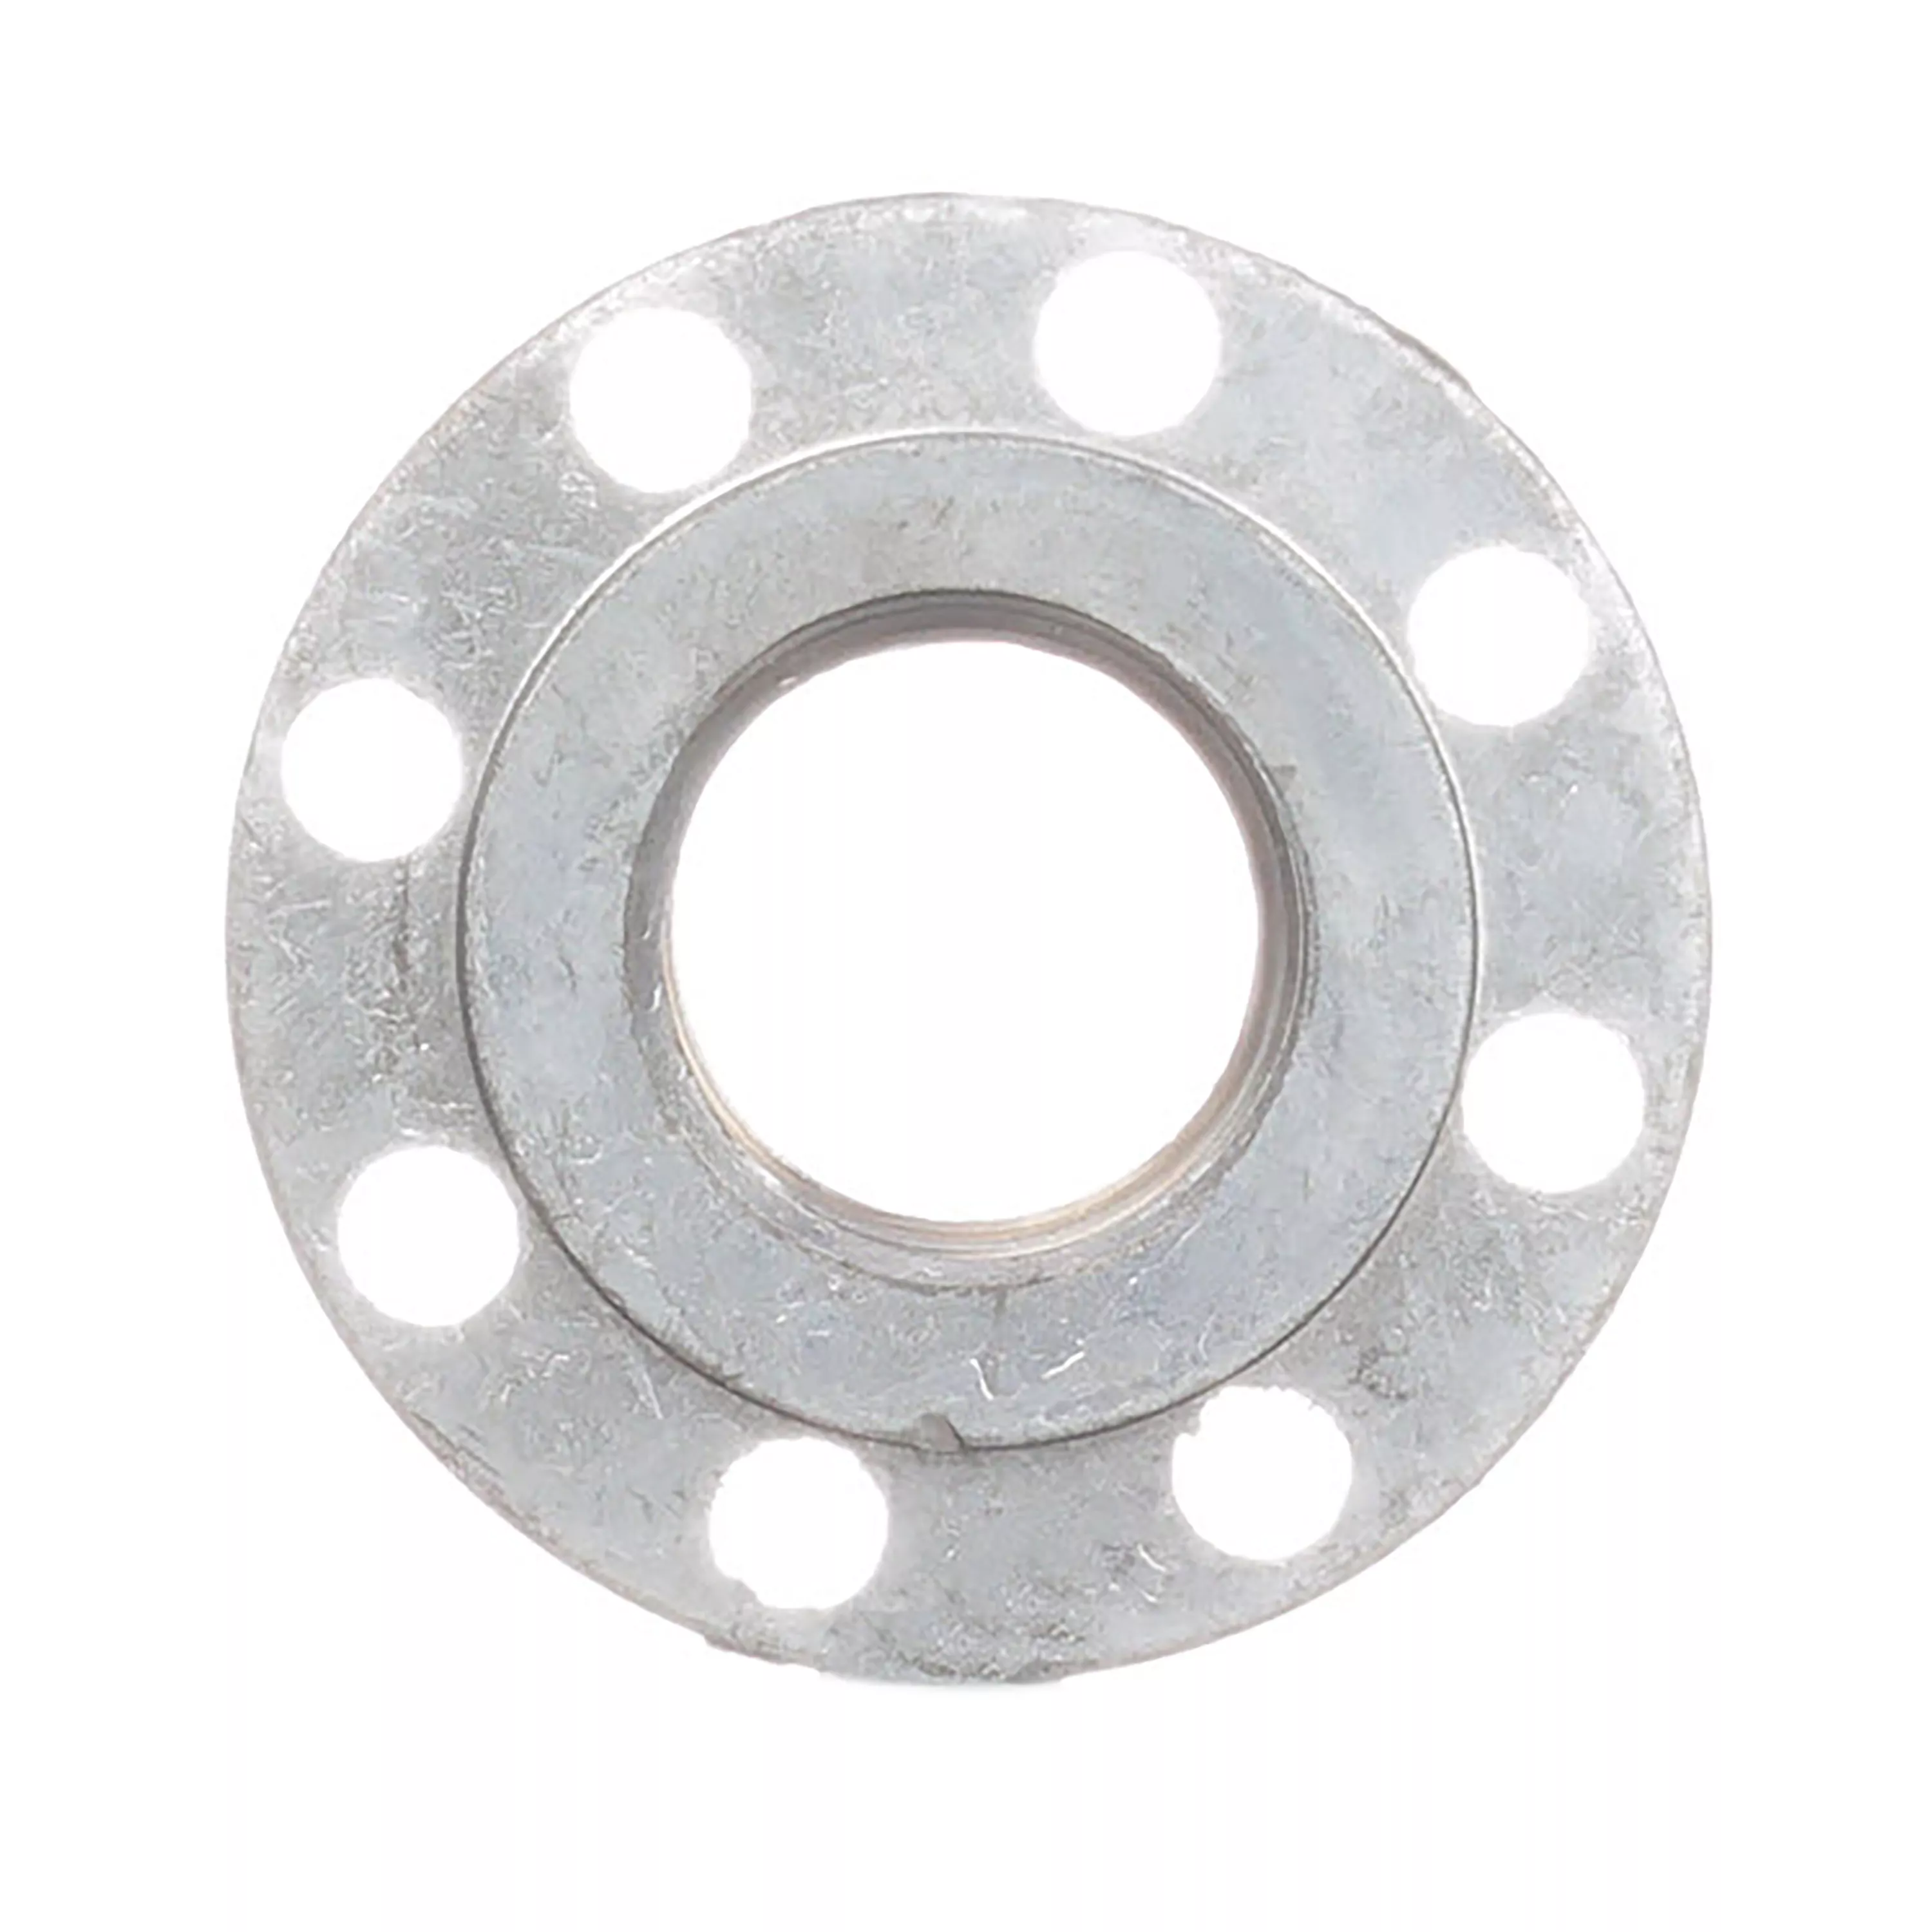 Standard Abrasives™ Die Cast Pad Nut 542012, 5/8 in-11, 5 ea/Case